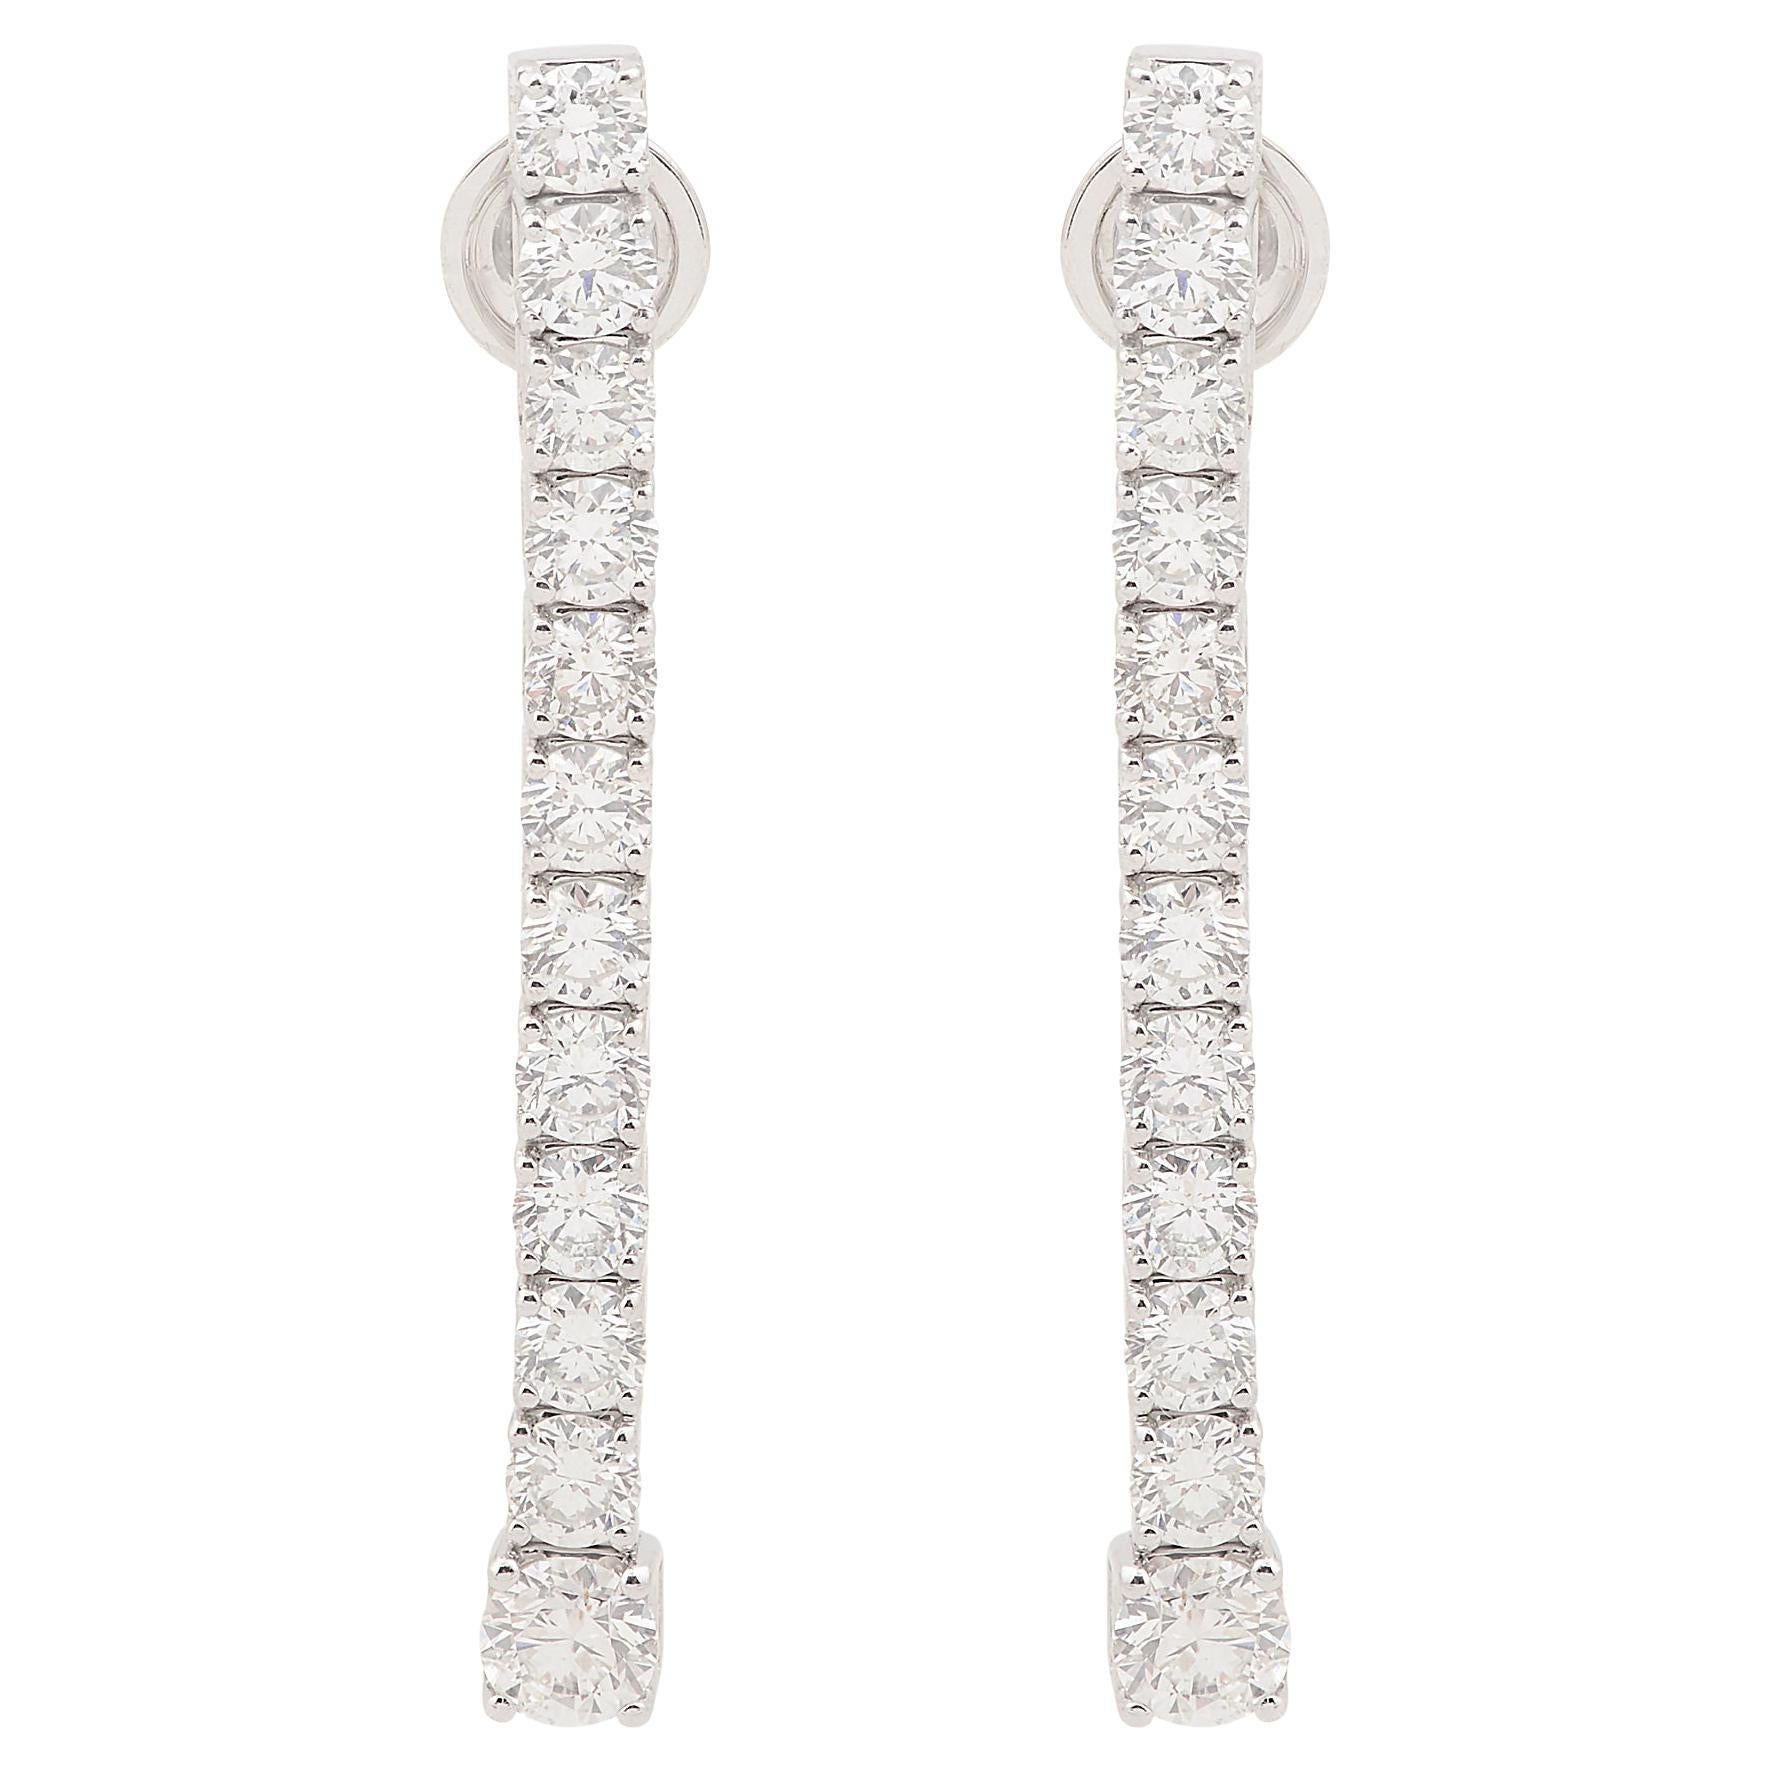 3.30 Carat Diamond Bar Dangle Earrings Solid 14k White Gold Handmade Jewelry New en vente